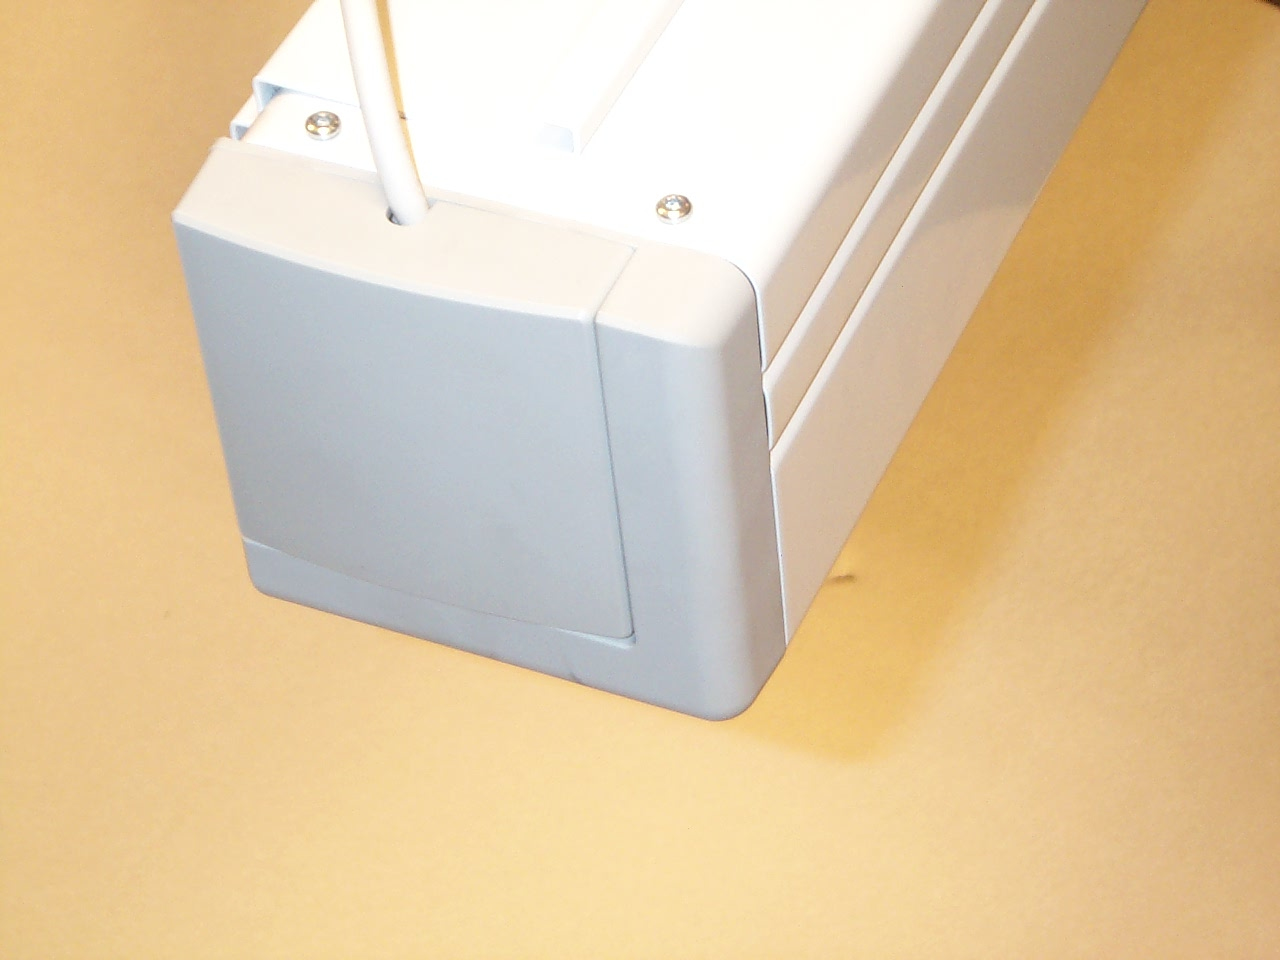 Da-Lite Compact Electrol 151x151 blanc mat avec bordure blanche 1:1